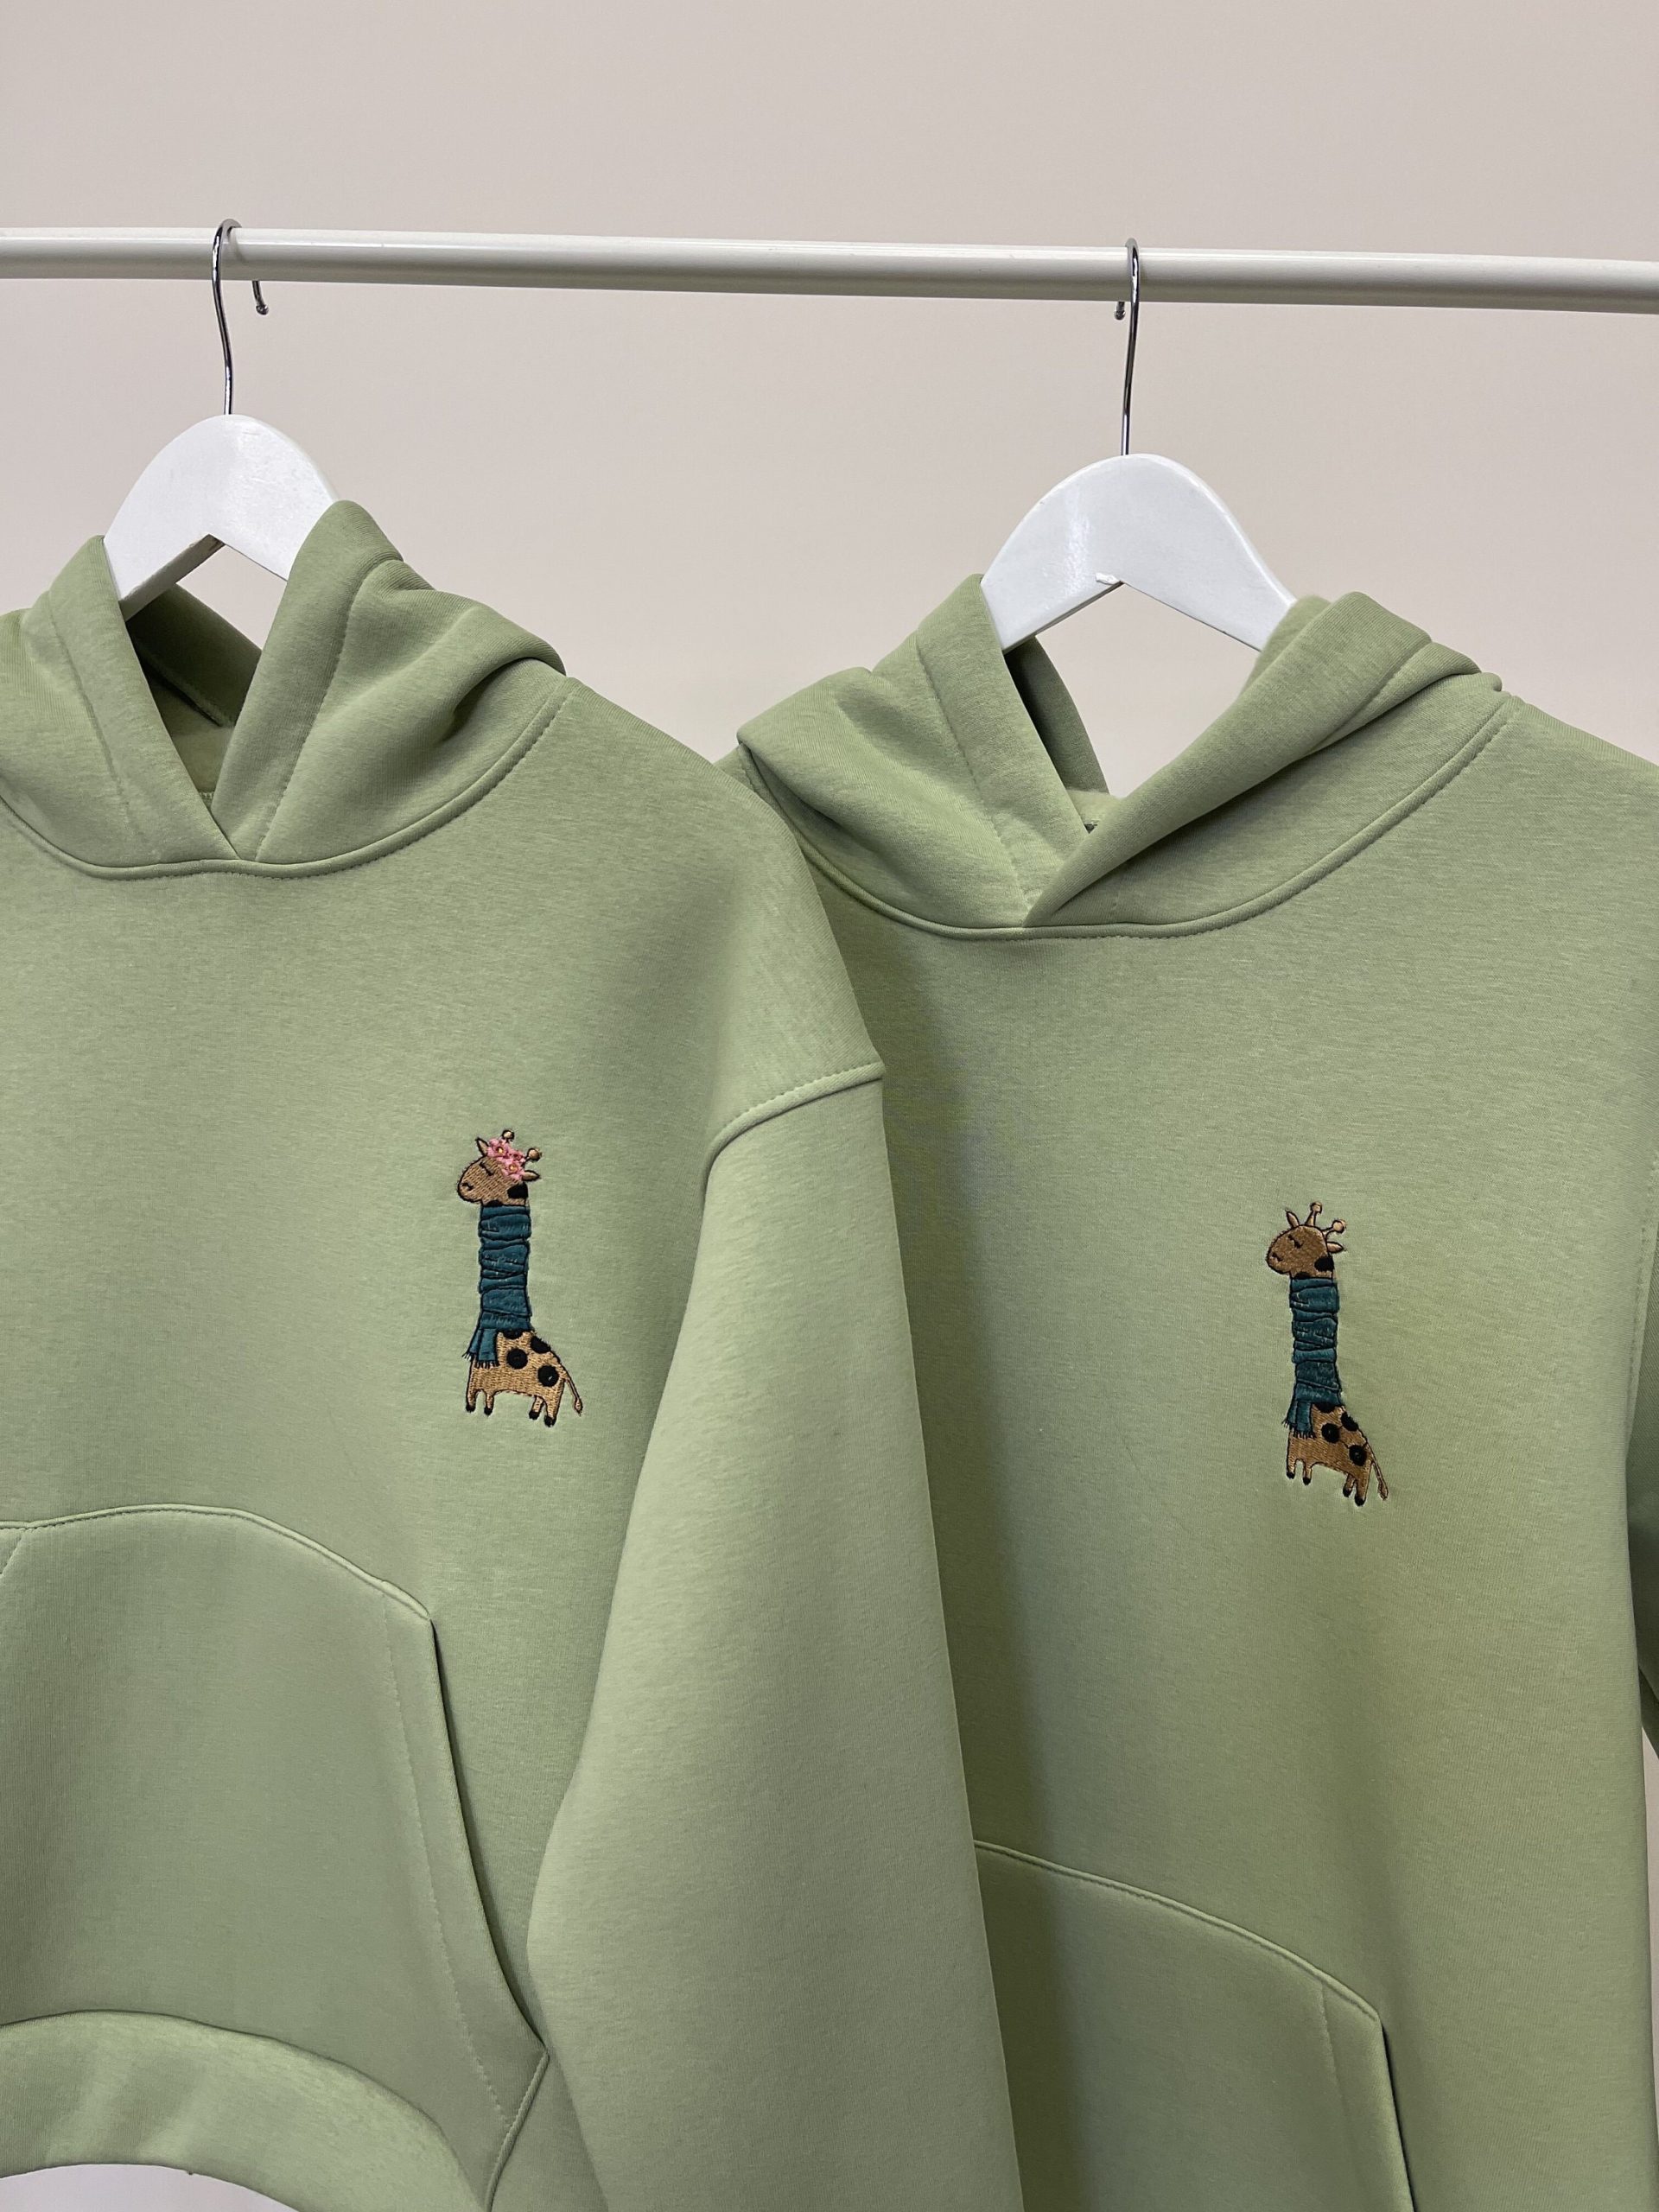 embroidered-couple-giraffe-hoodies-cartoon-animal-crewneck-matching-sweatshirts_1668068643-scaled-1.jpg